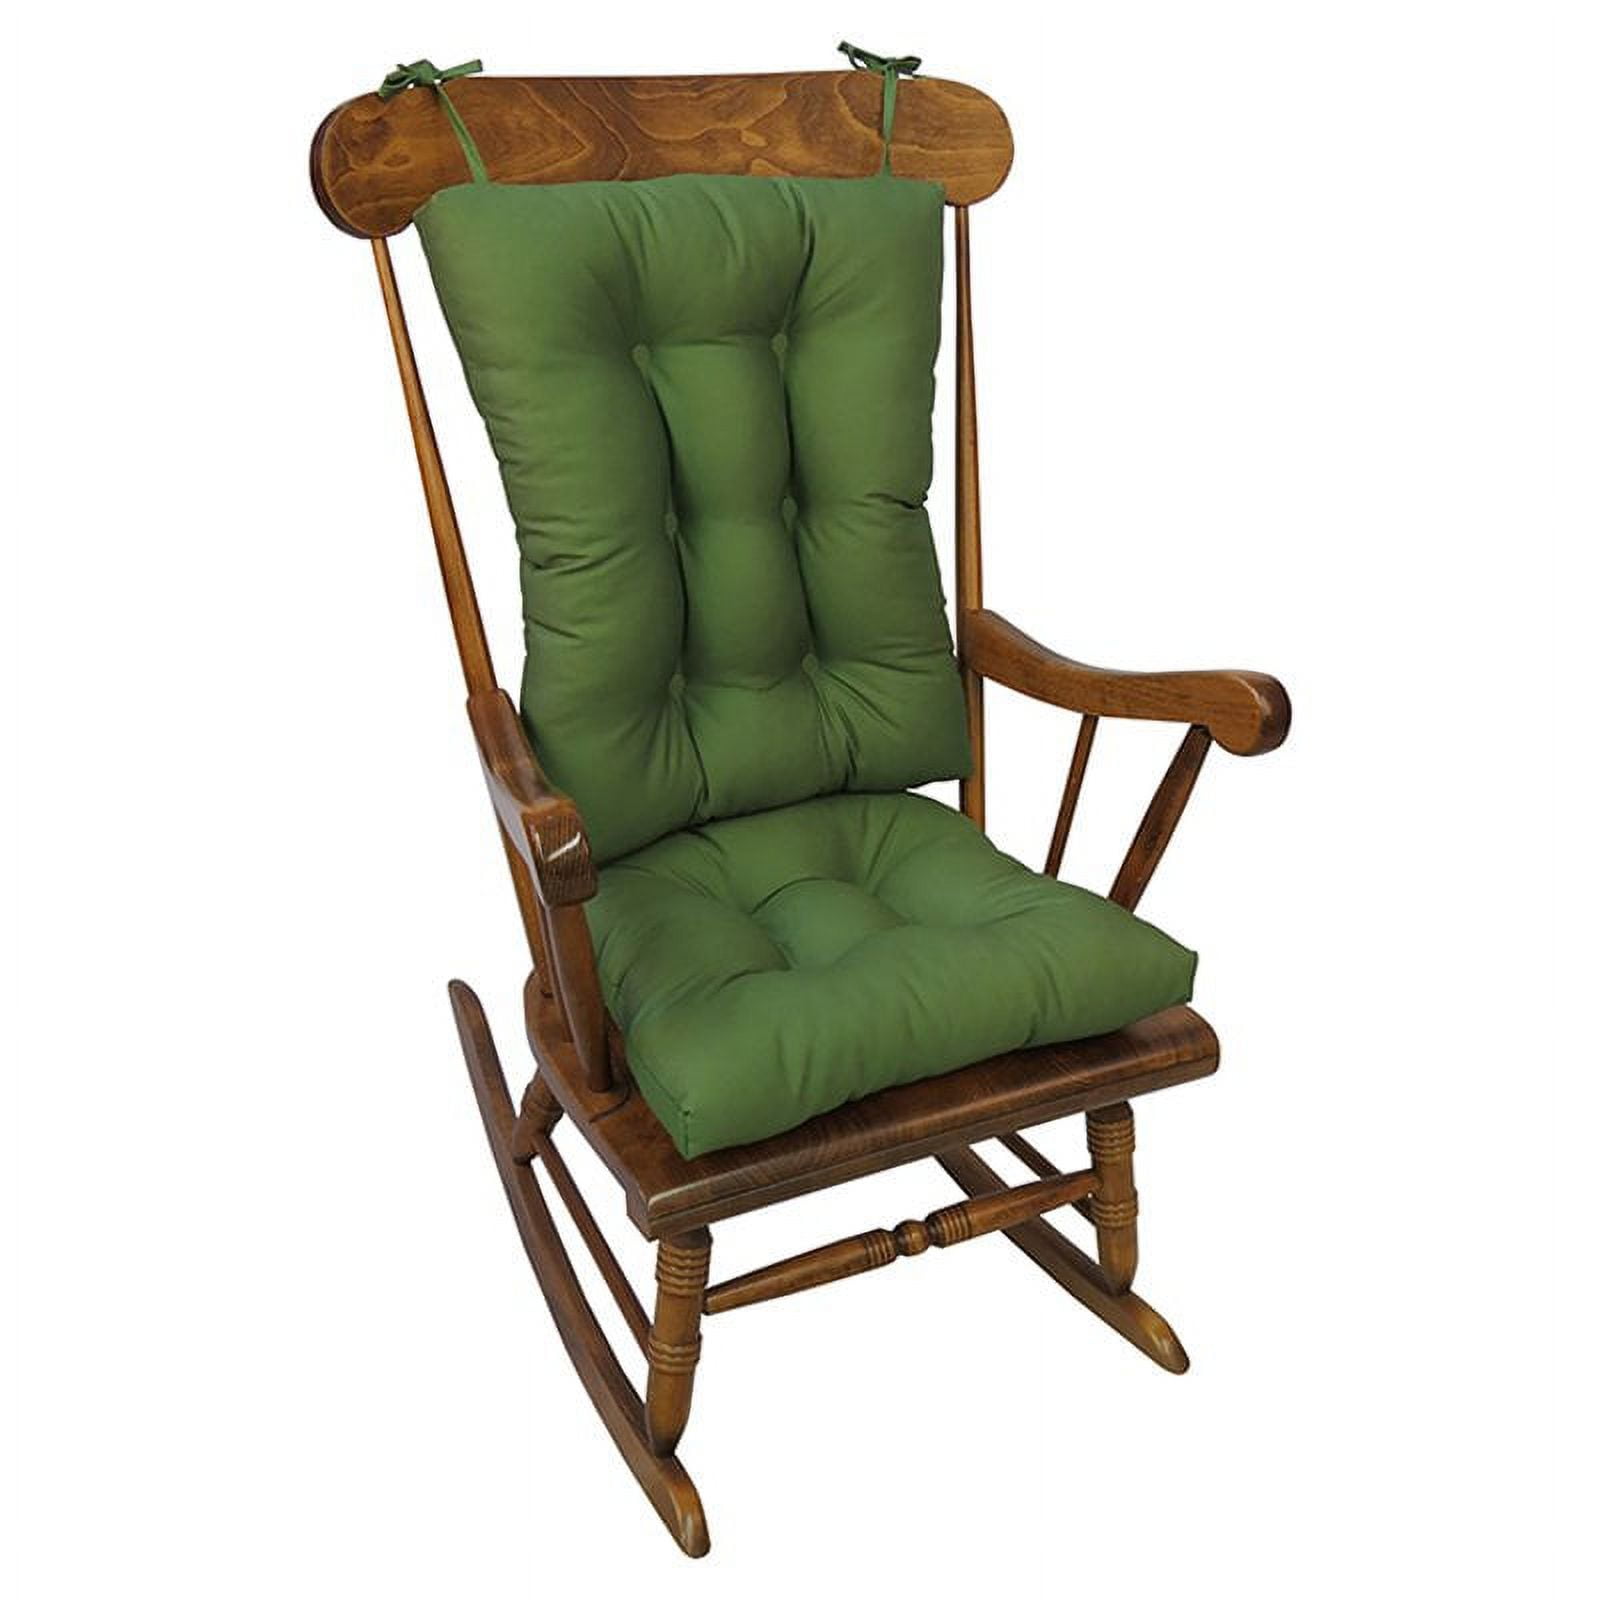 Rockin Cushions POÄNG Chair and Ottoman Covers, Velvet Dark Green